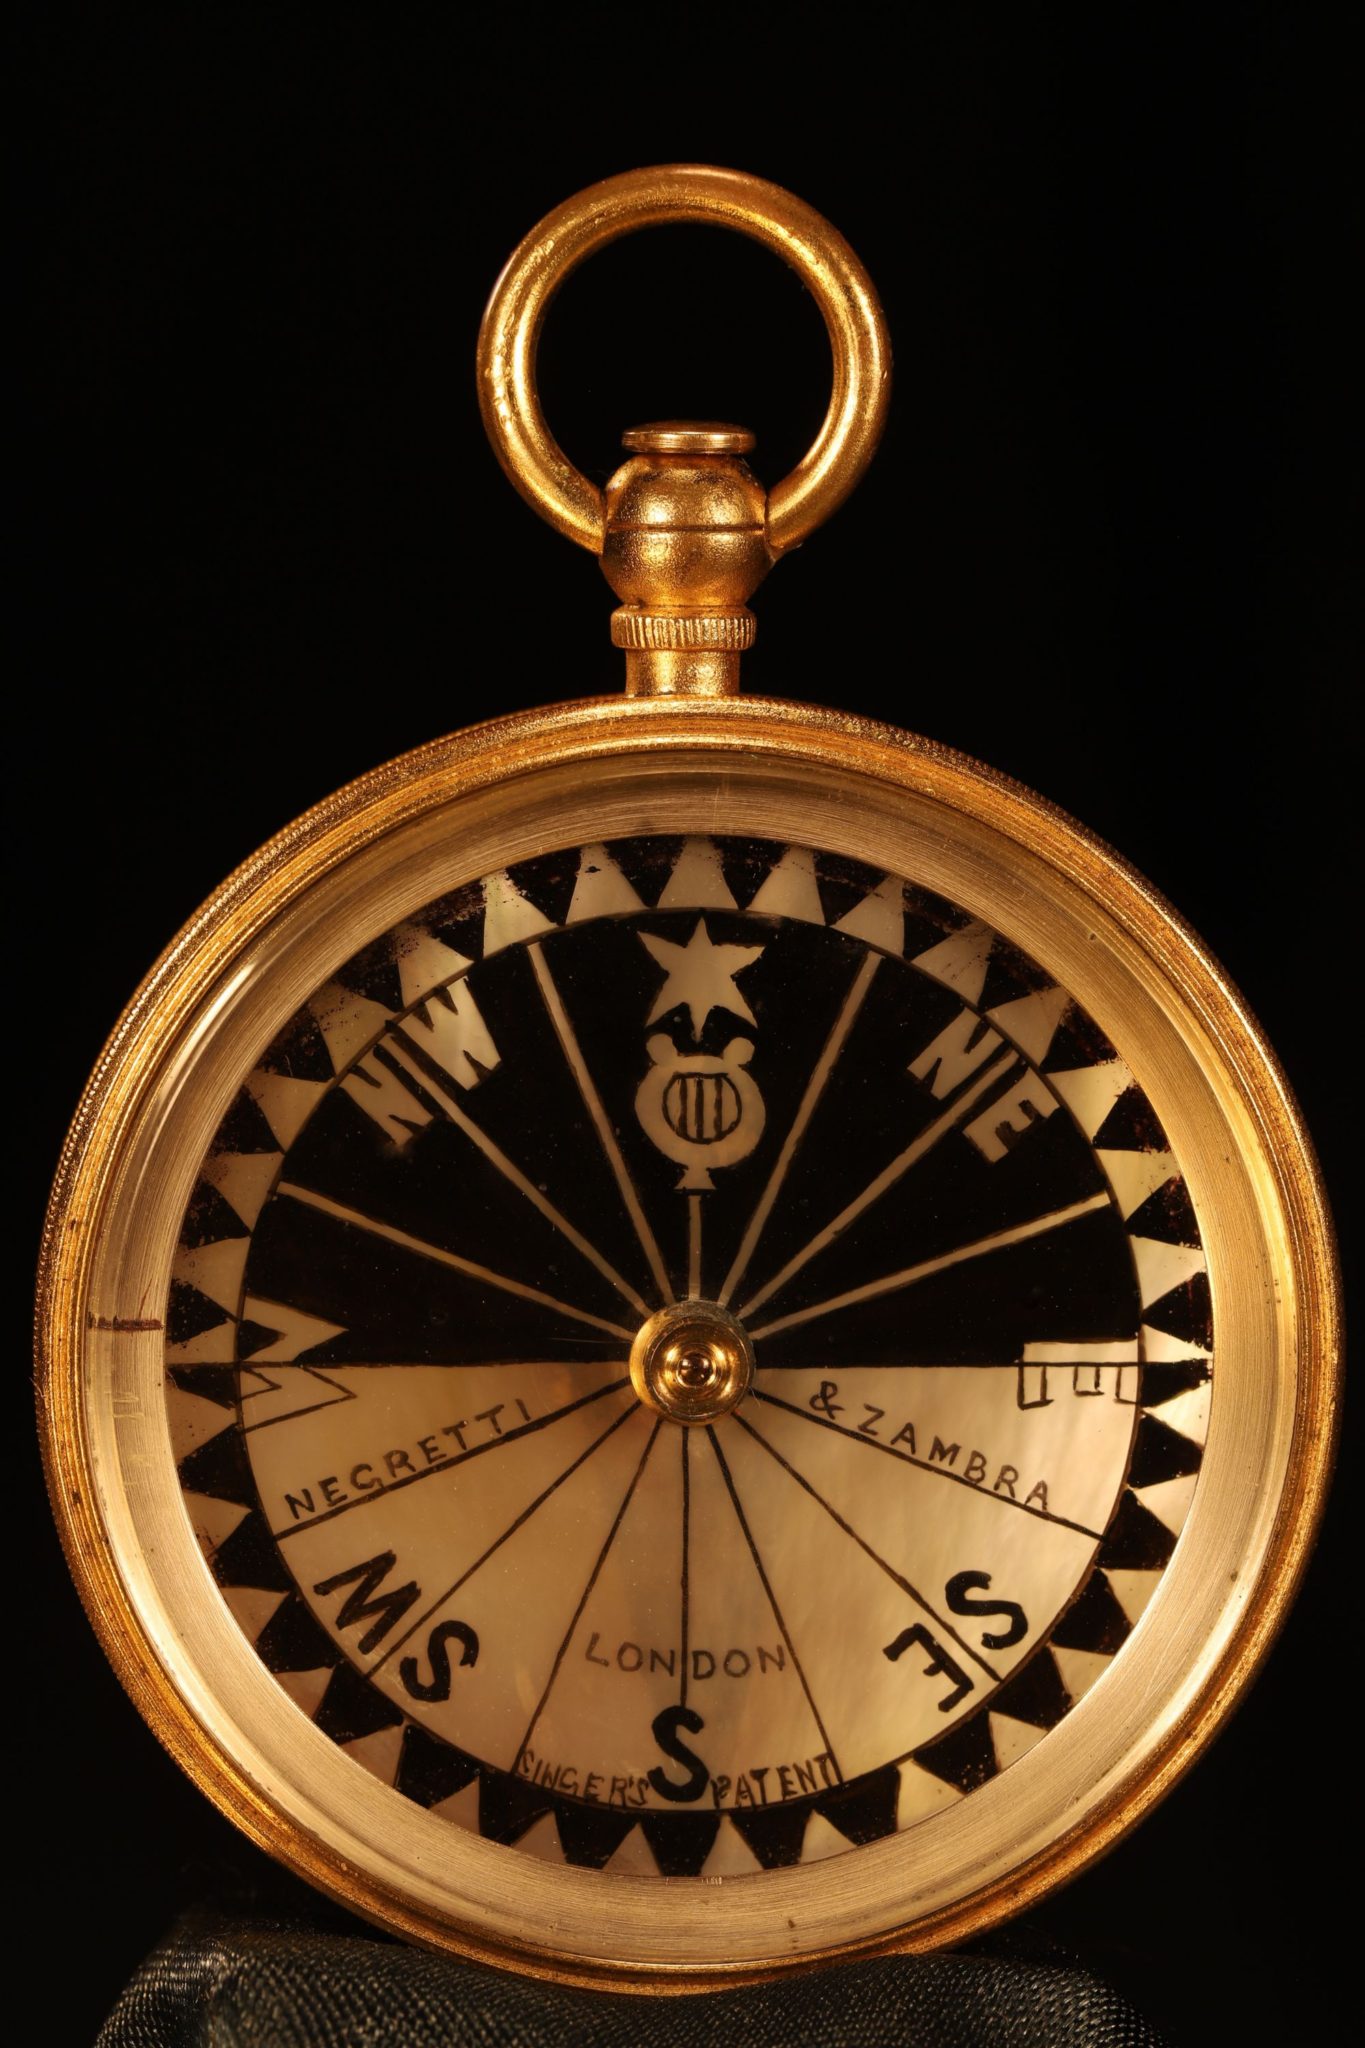 Image of Negretti & Zambra Pocket Barometer Travel Compendium No 9886 c1905